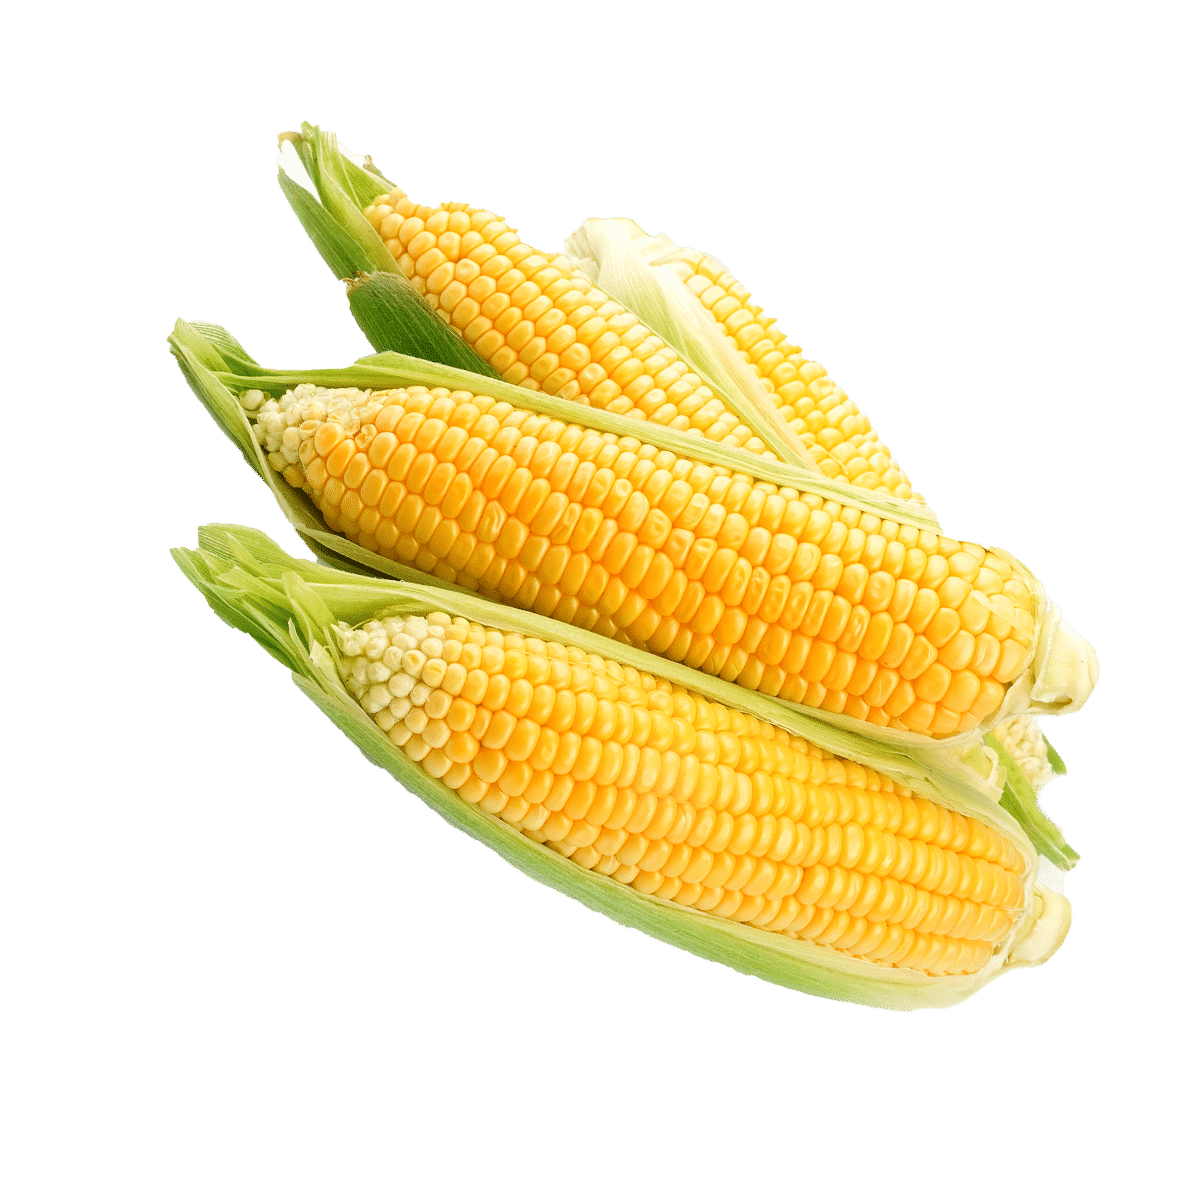 Local Sweet Corn (Trusted Supplier) - BinksBerry Hollow